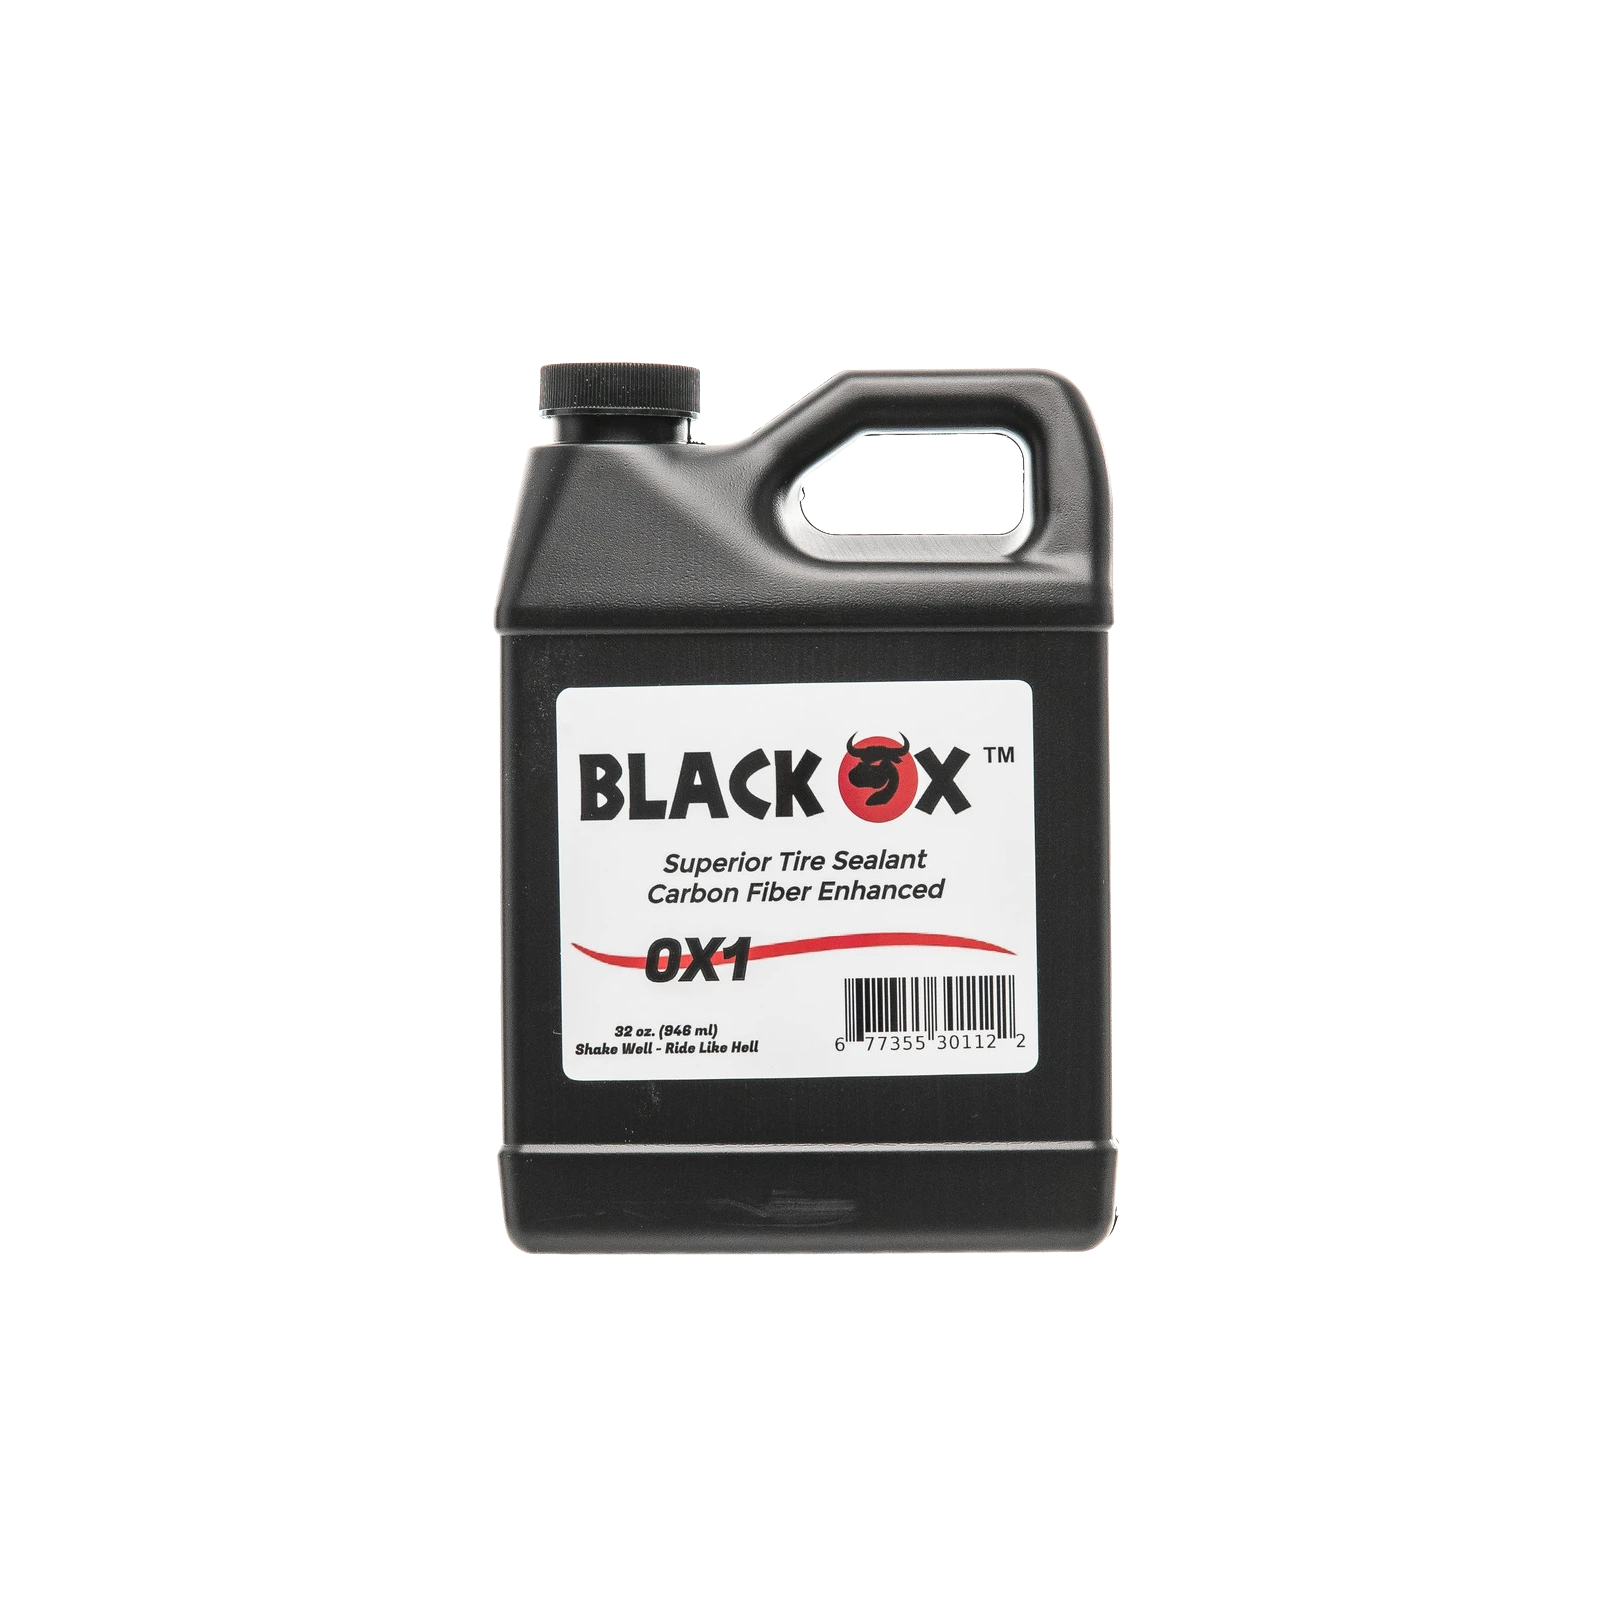 Black Ox OX1 Tire Sealant 32oz